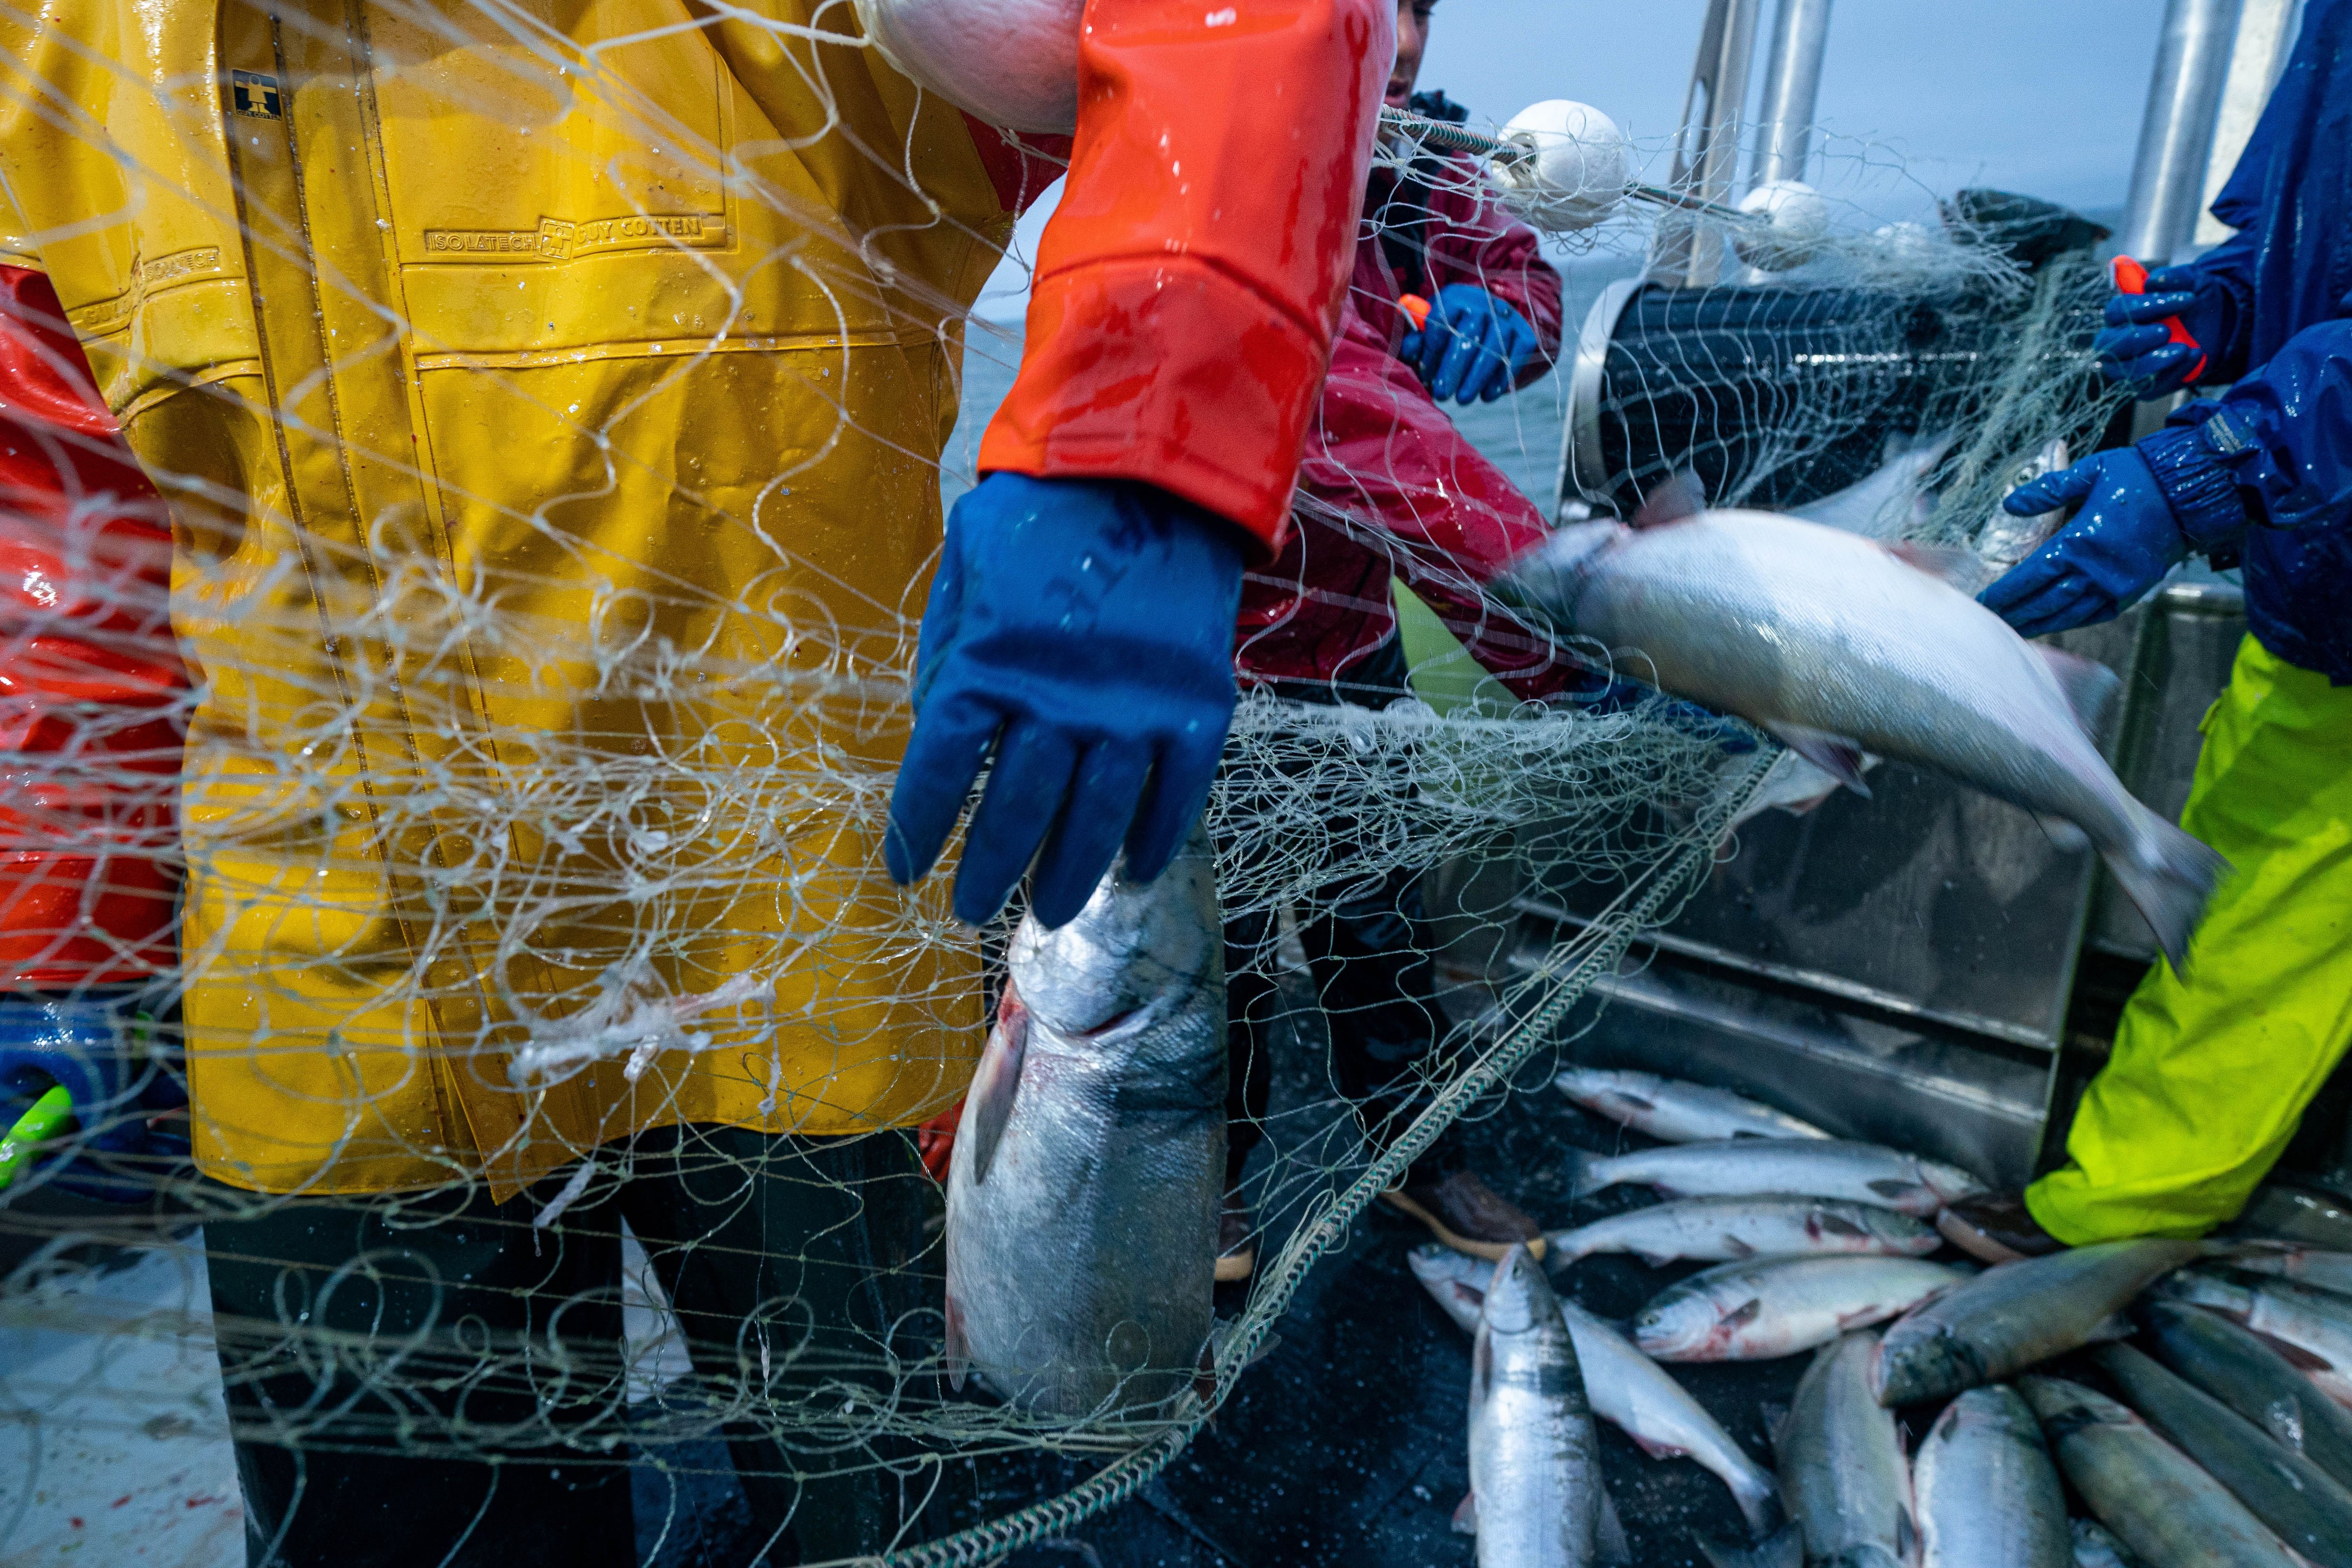 Alaska salmon fishermen fume over low prices, but processors say